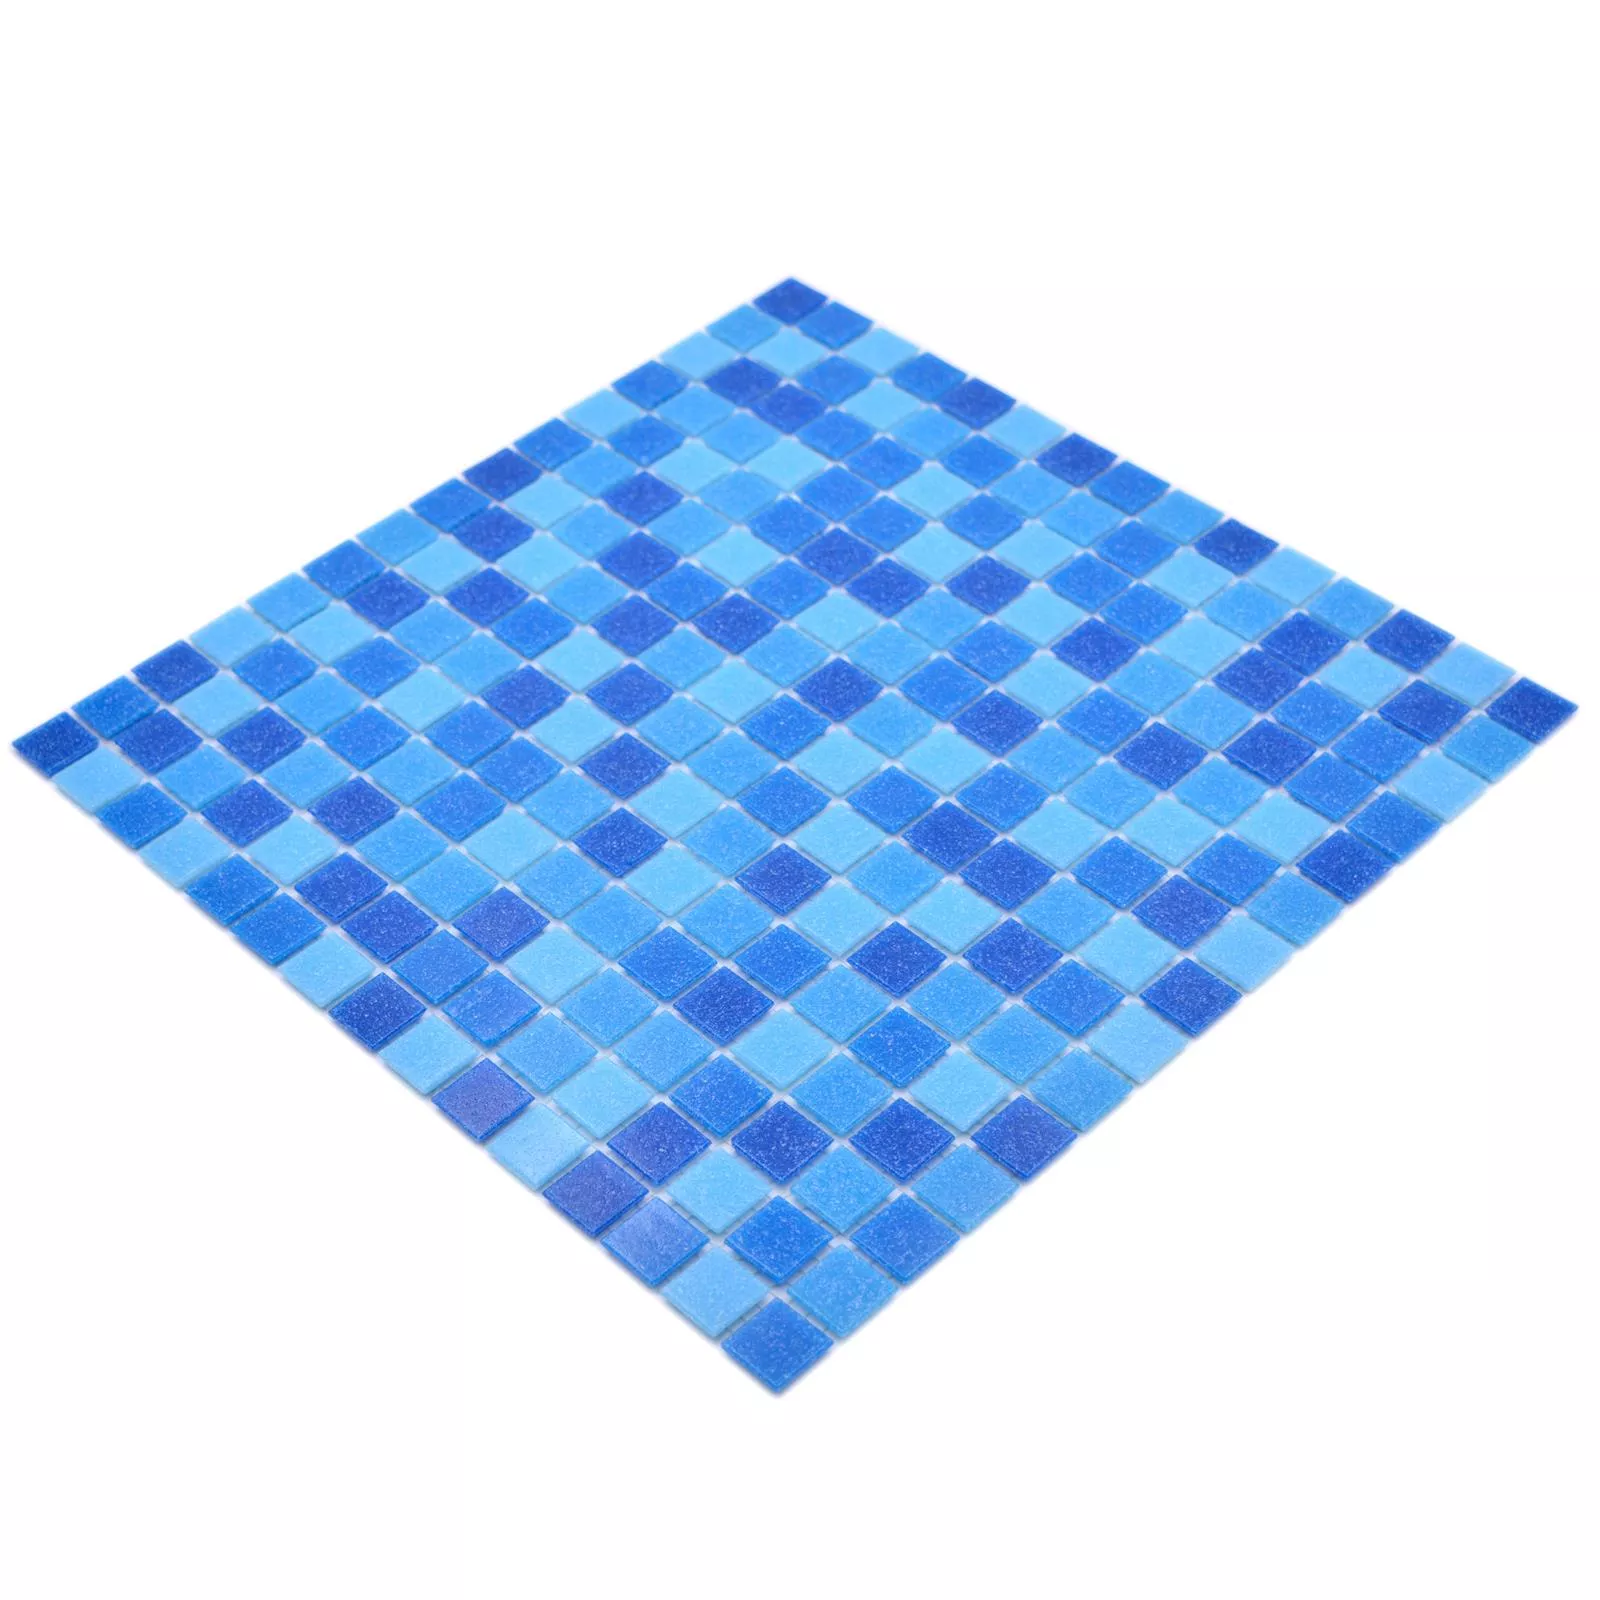 Schwimmbad Pool Mosaik North Sea Blau Hellblau Mix